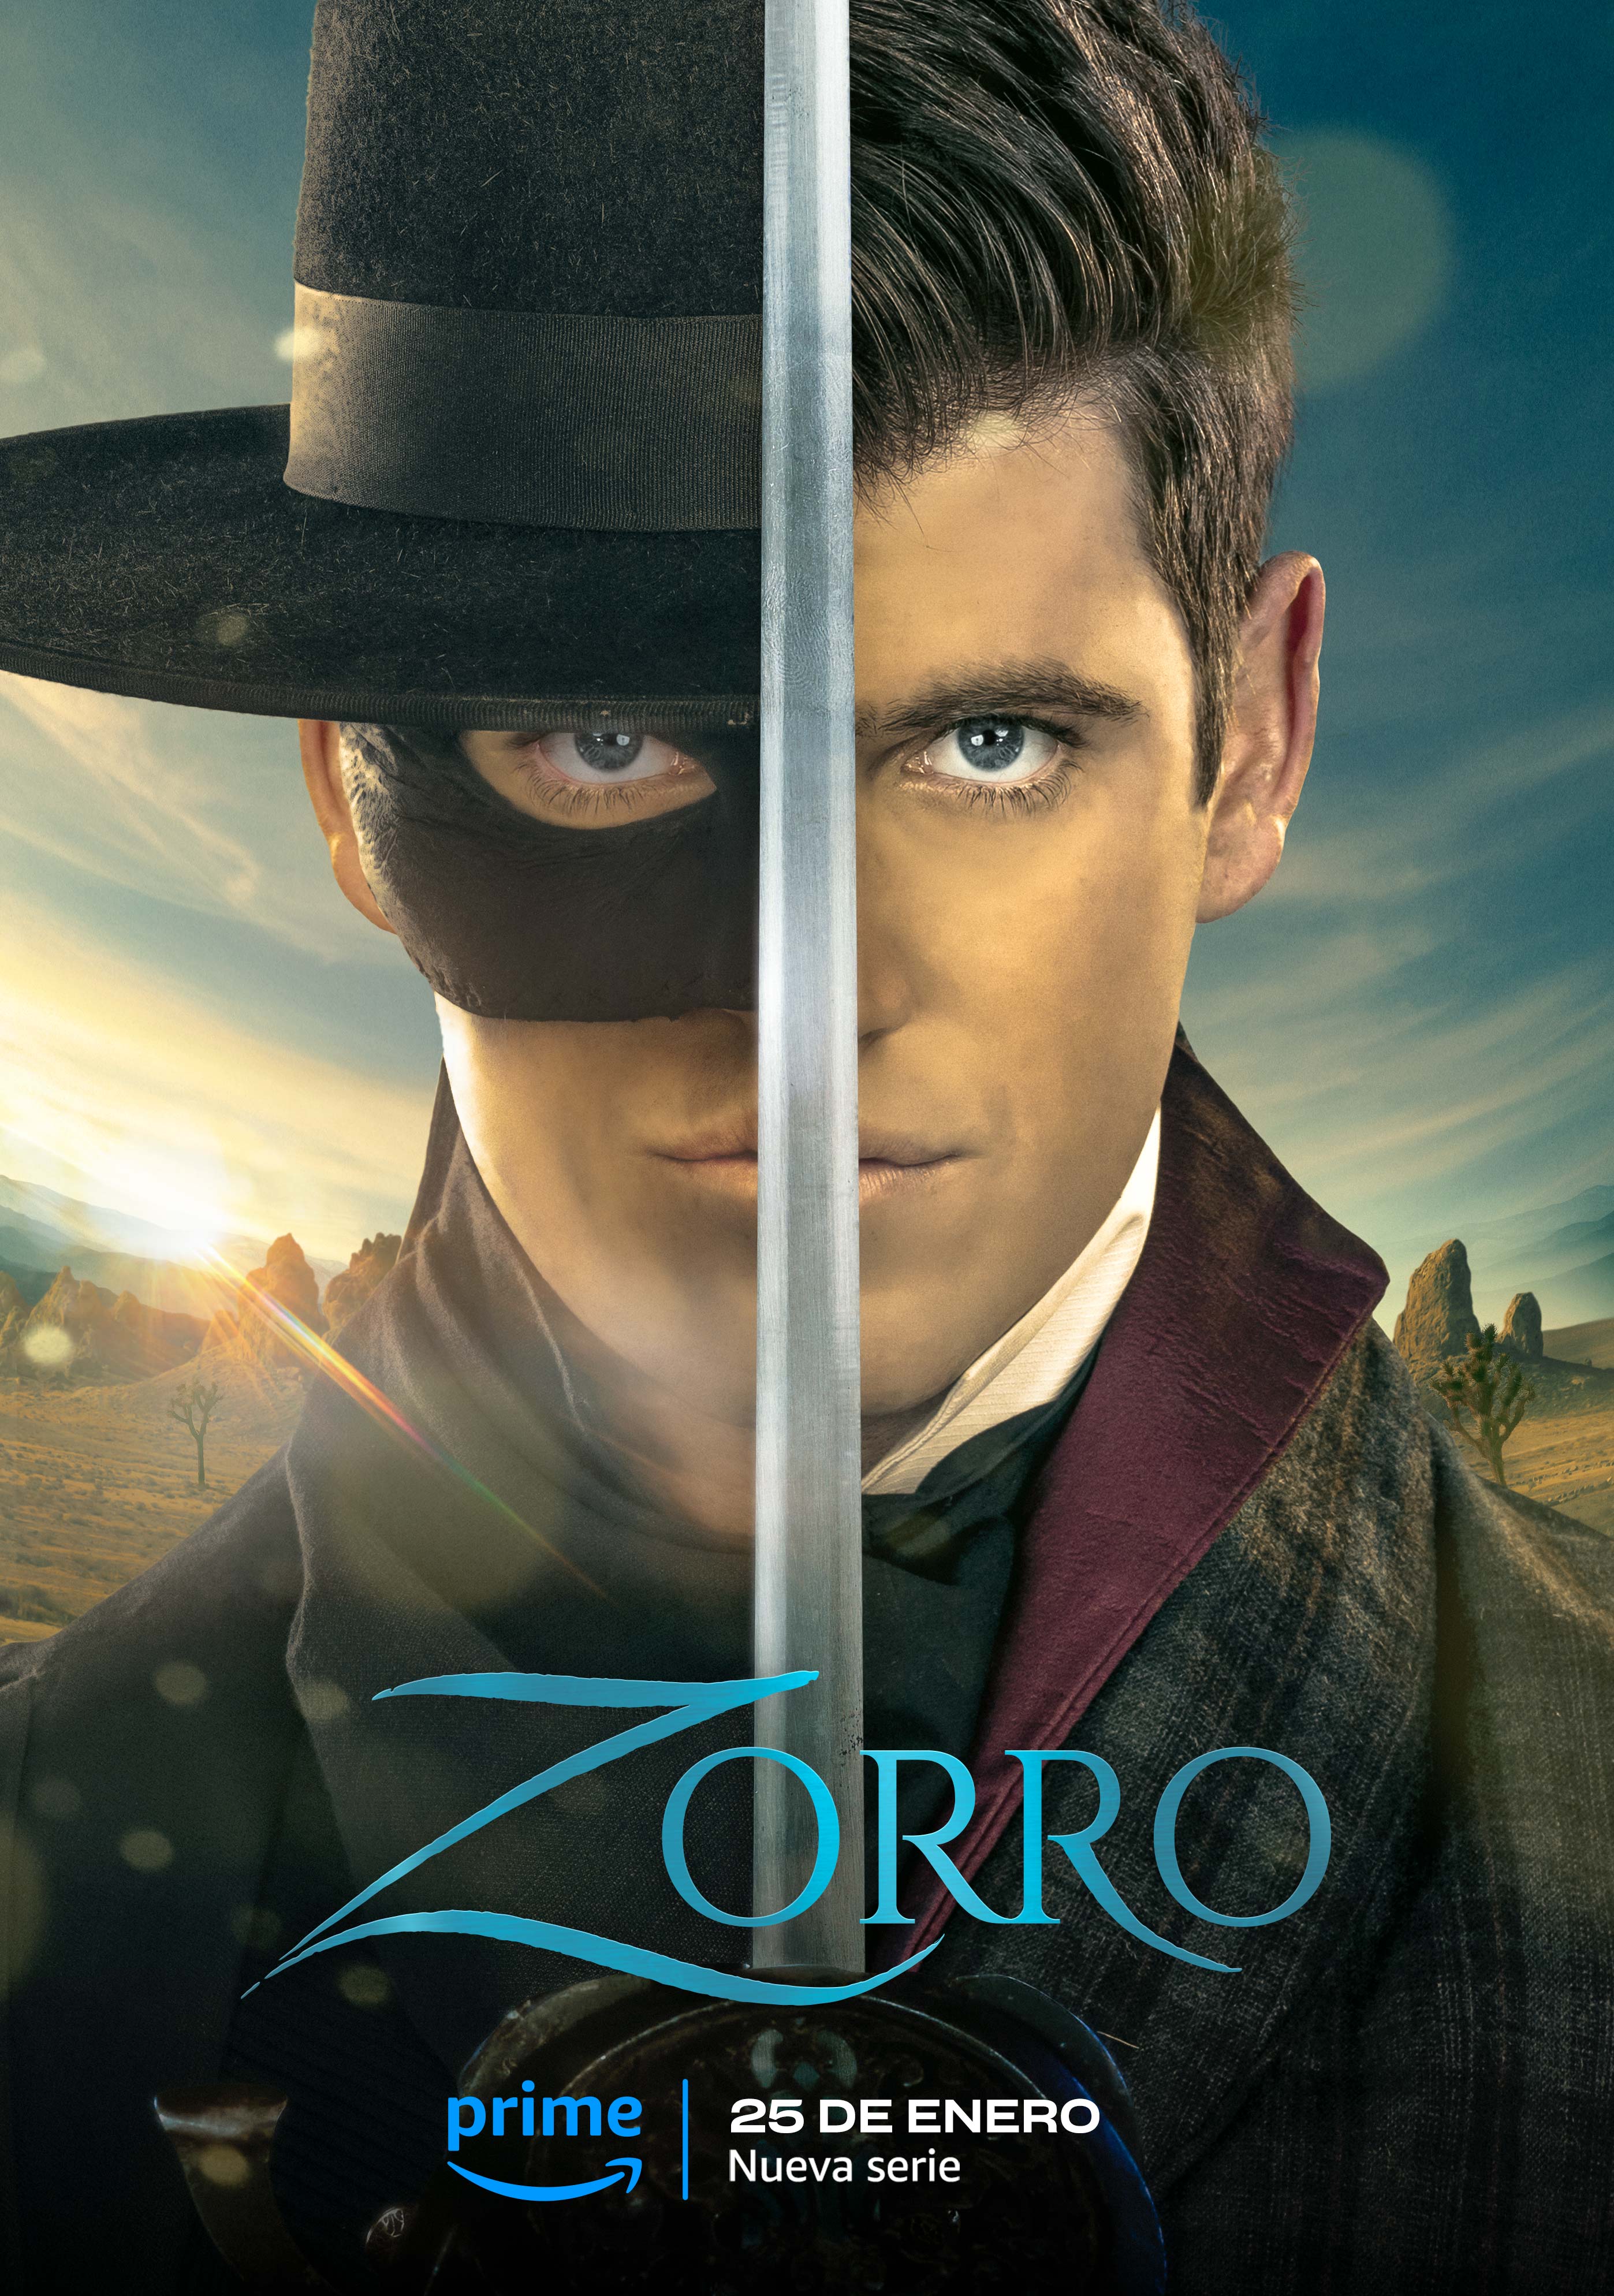 Póster e imágenes de Zorro, la nueva serie de Prime Video